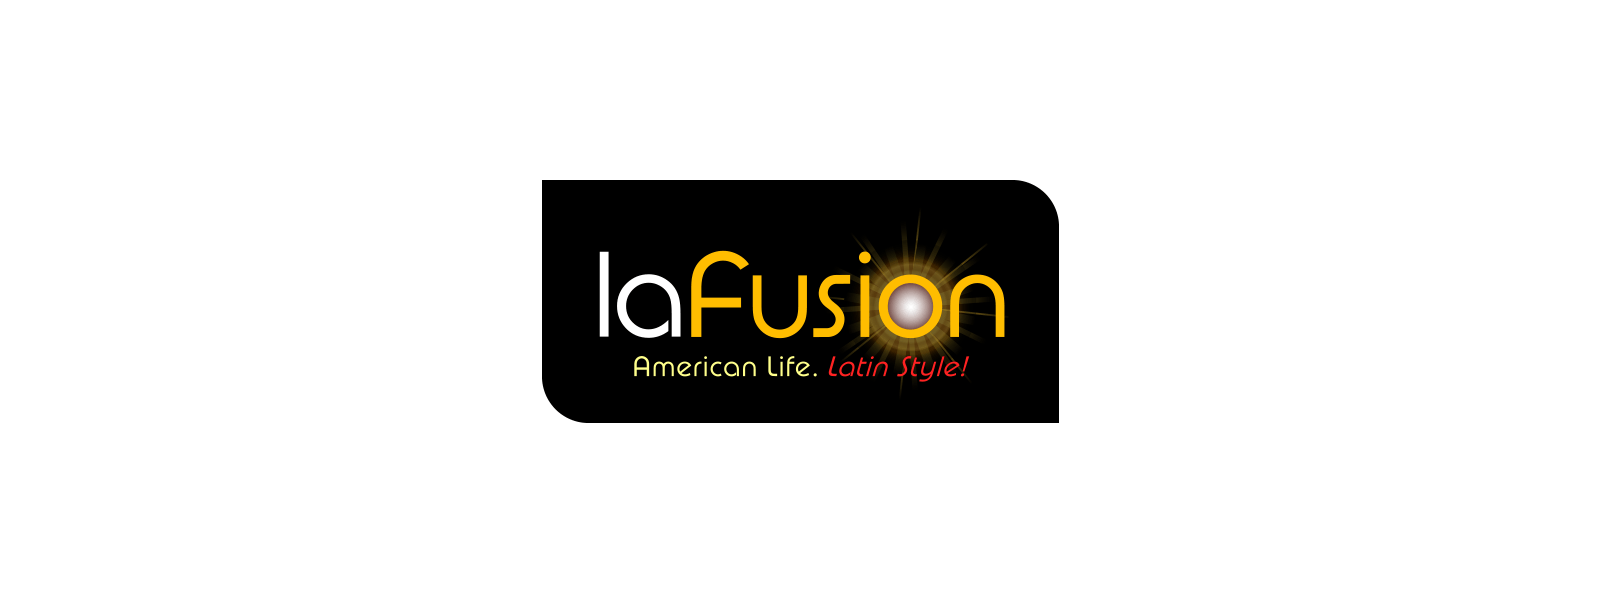 lafusion logo